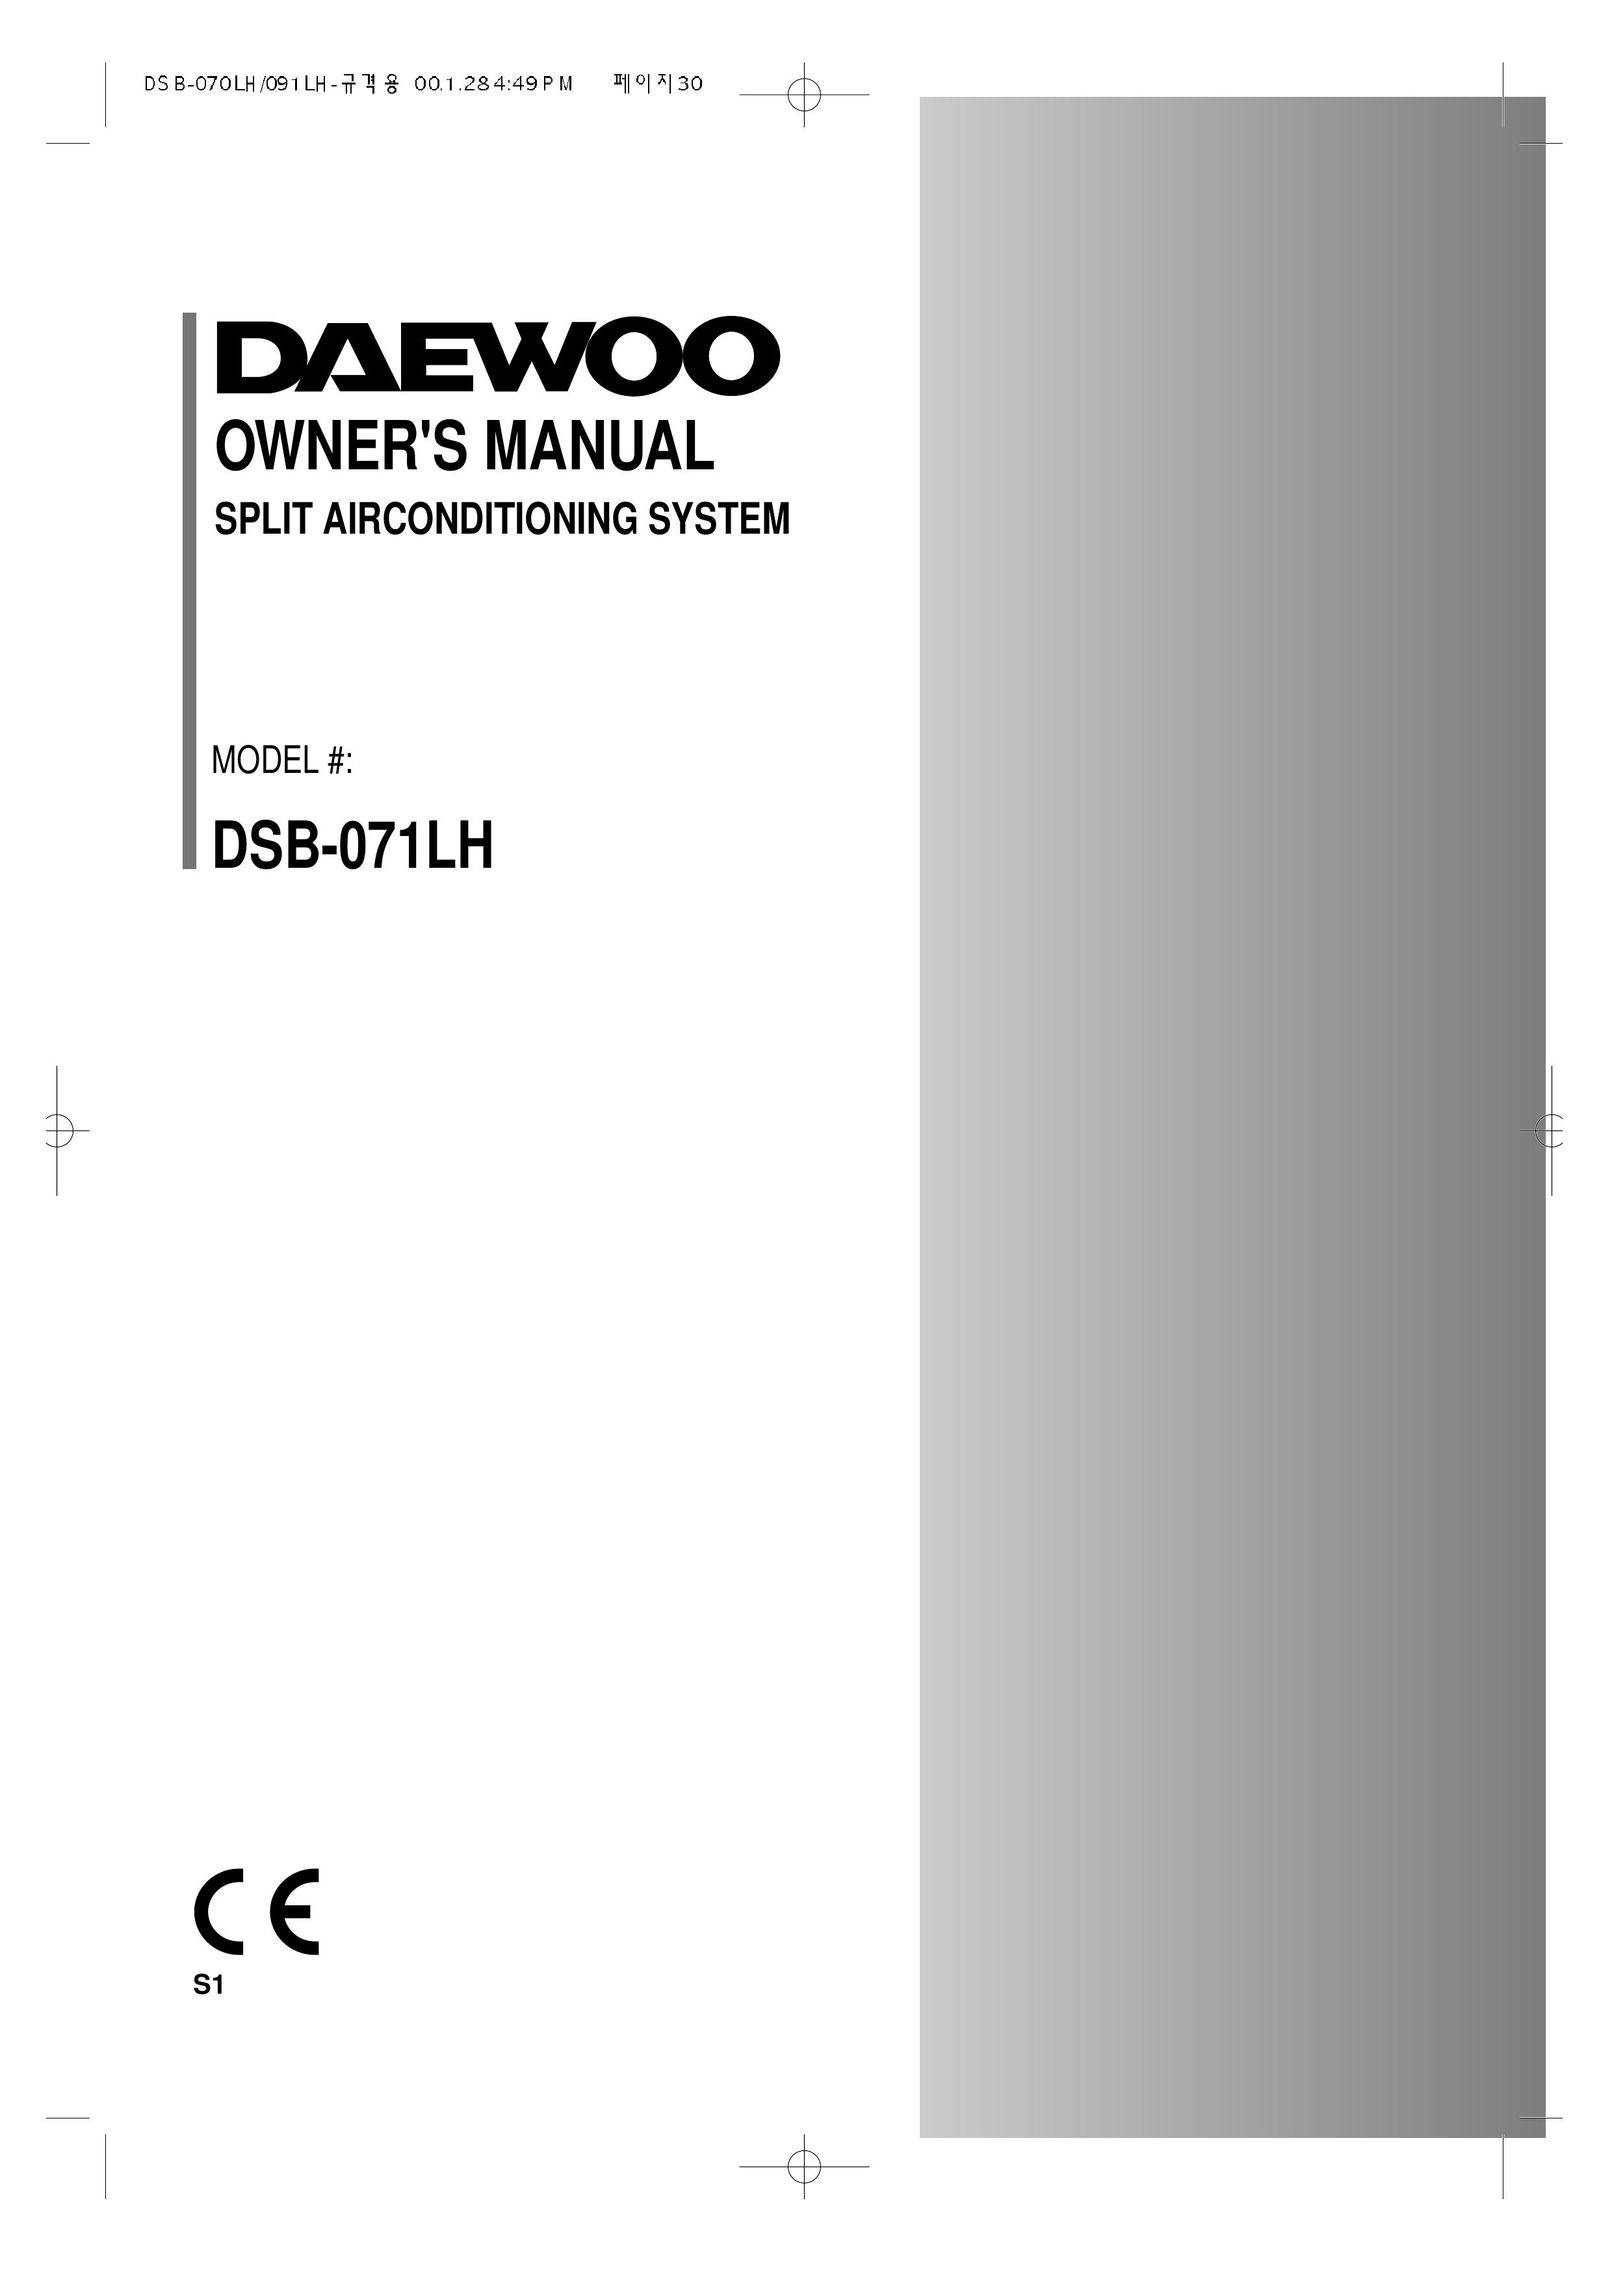 Daewoo DSB-071LH Air Conditioner User Manual